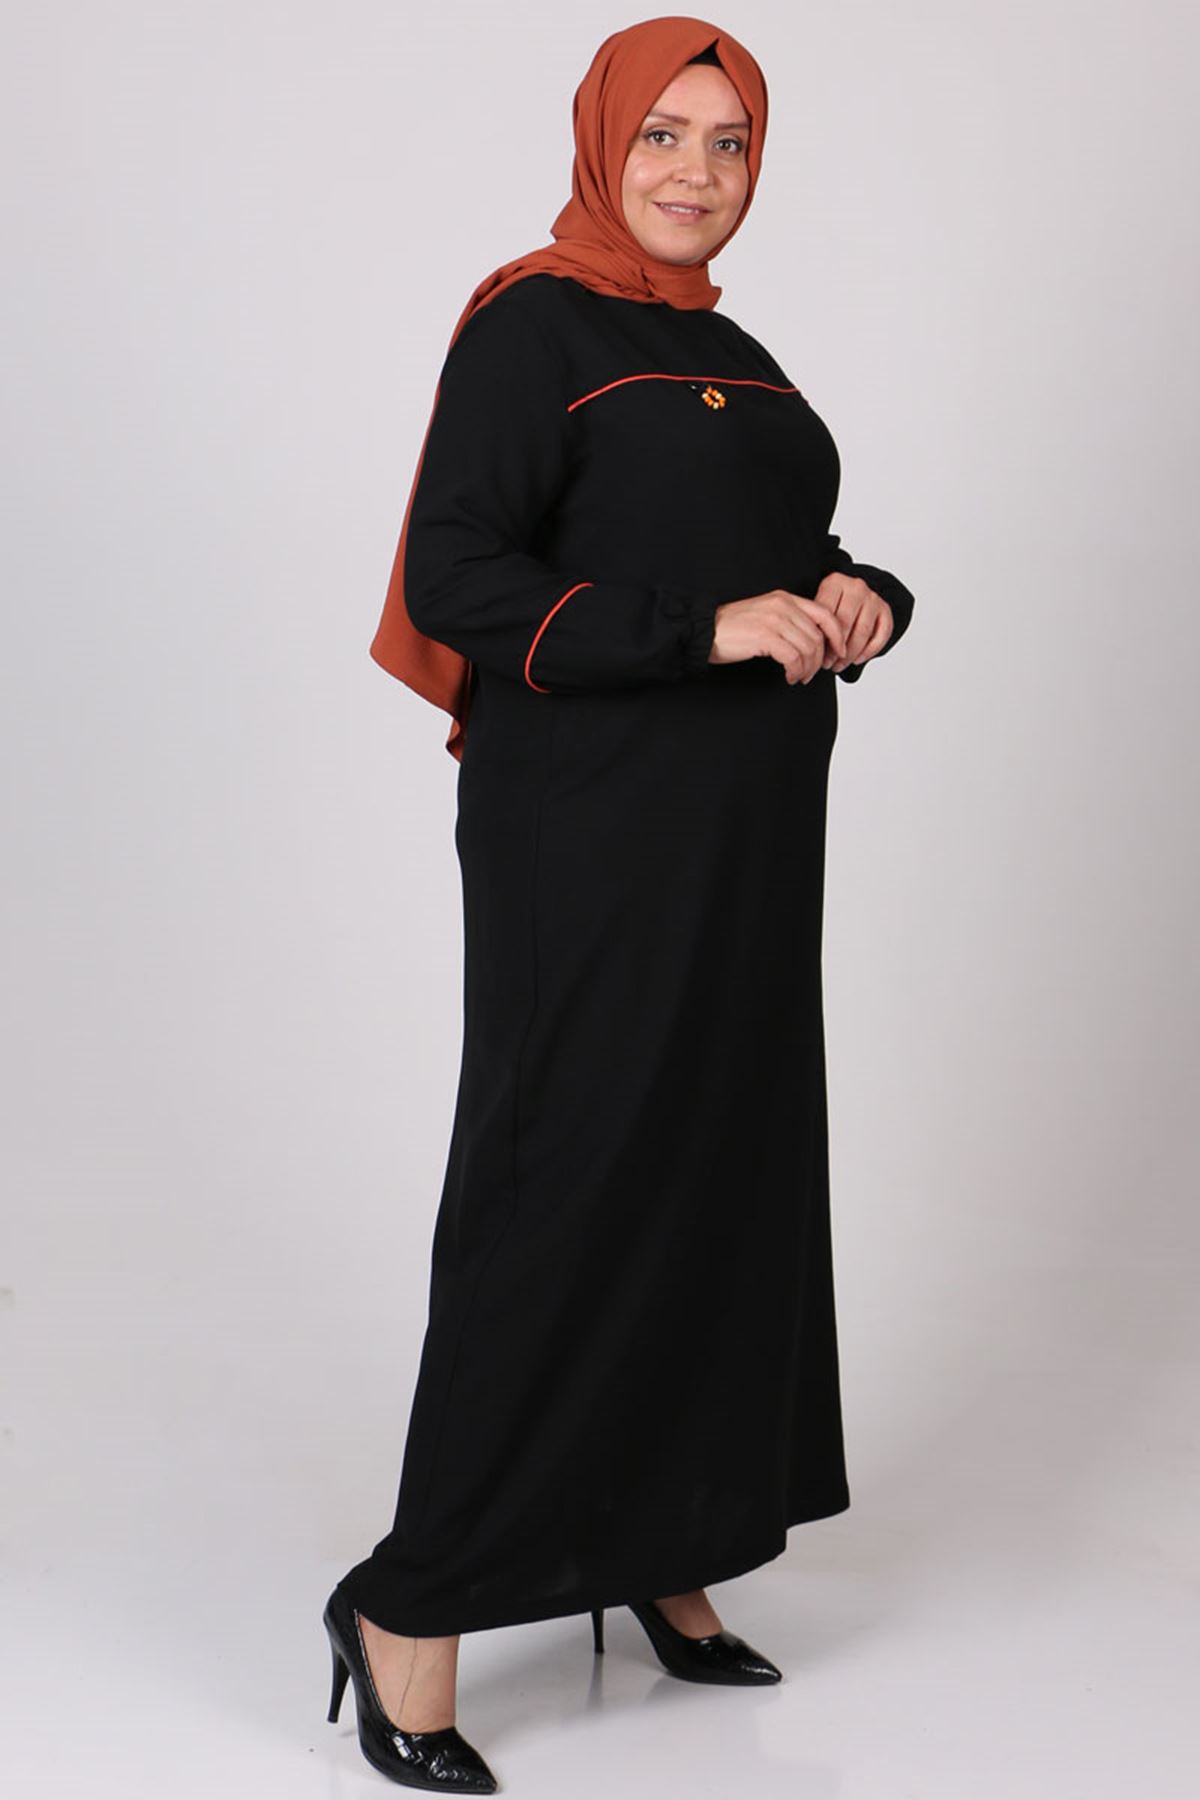 22025 Büyük Beden Renkli Biyeli Moskino Elbise - Siyah